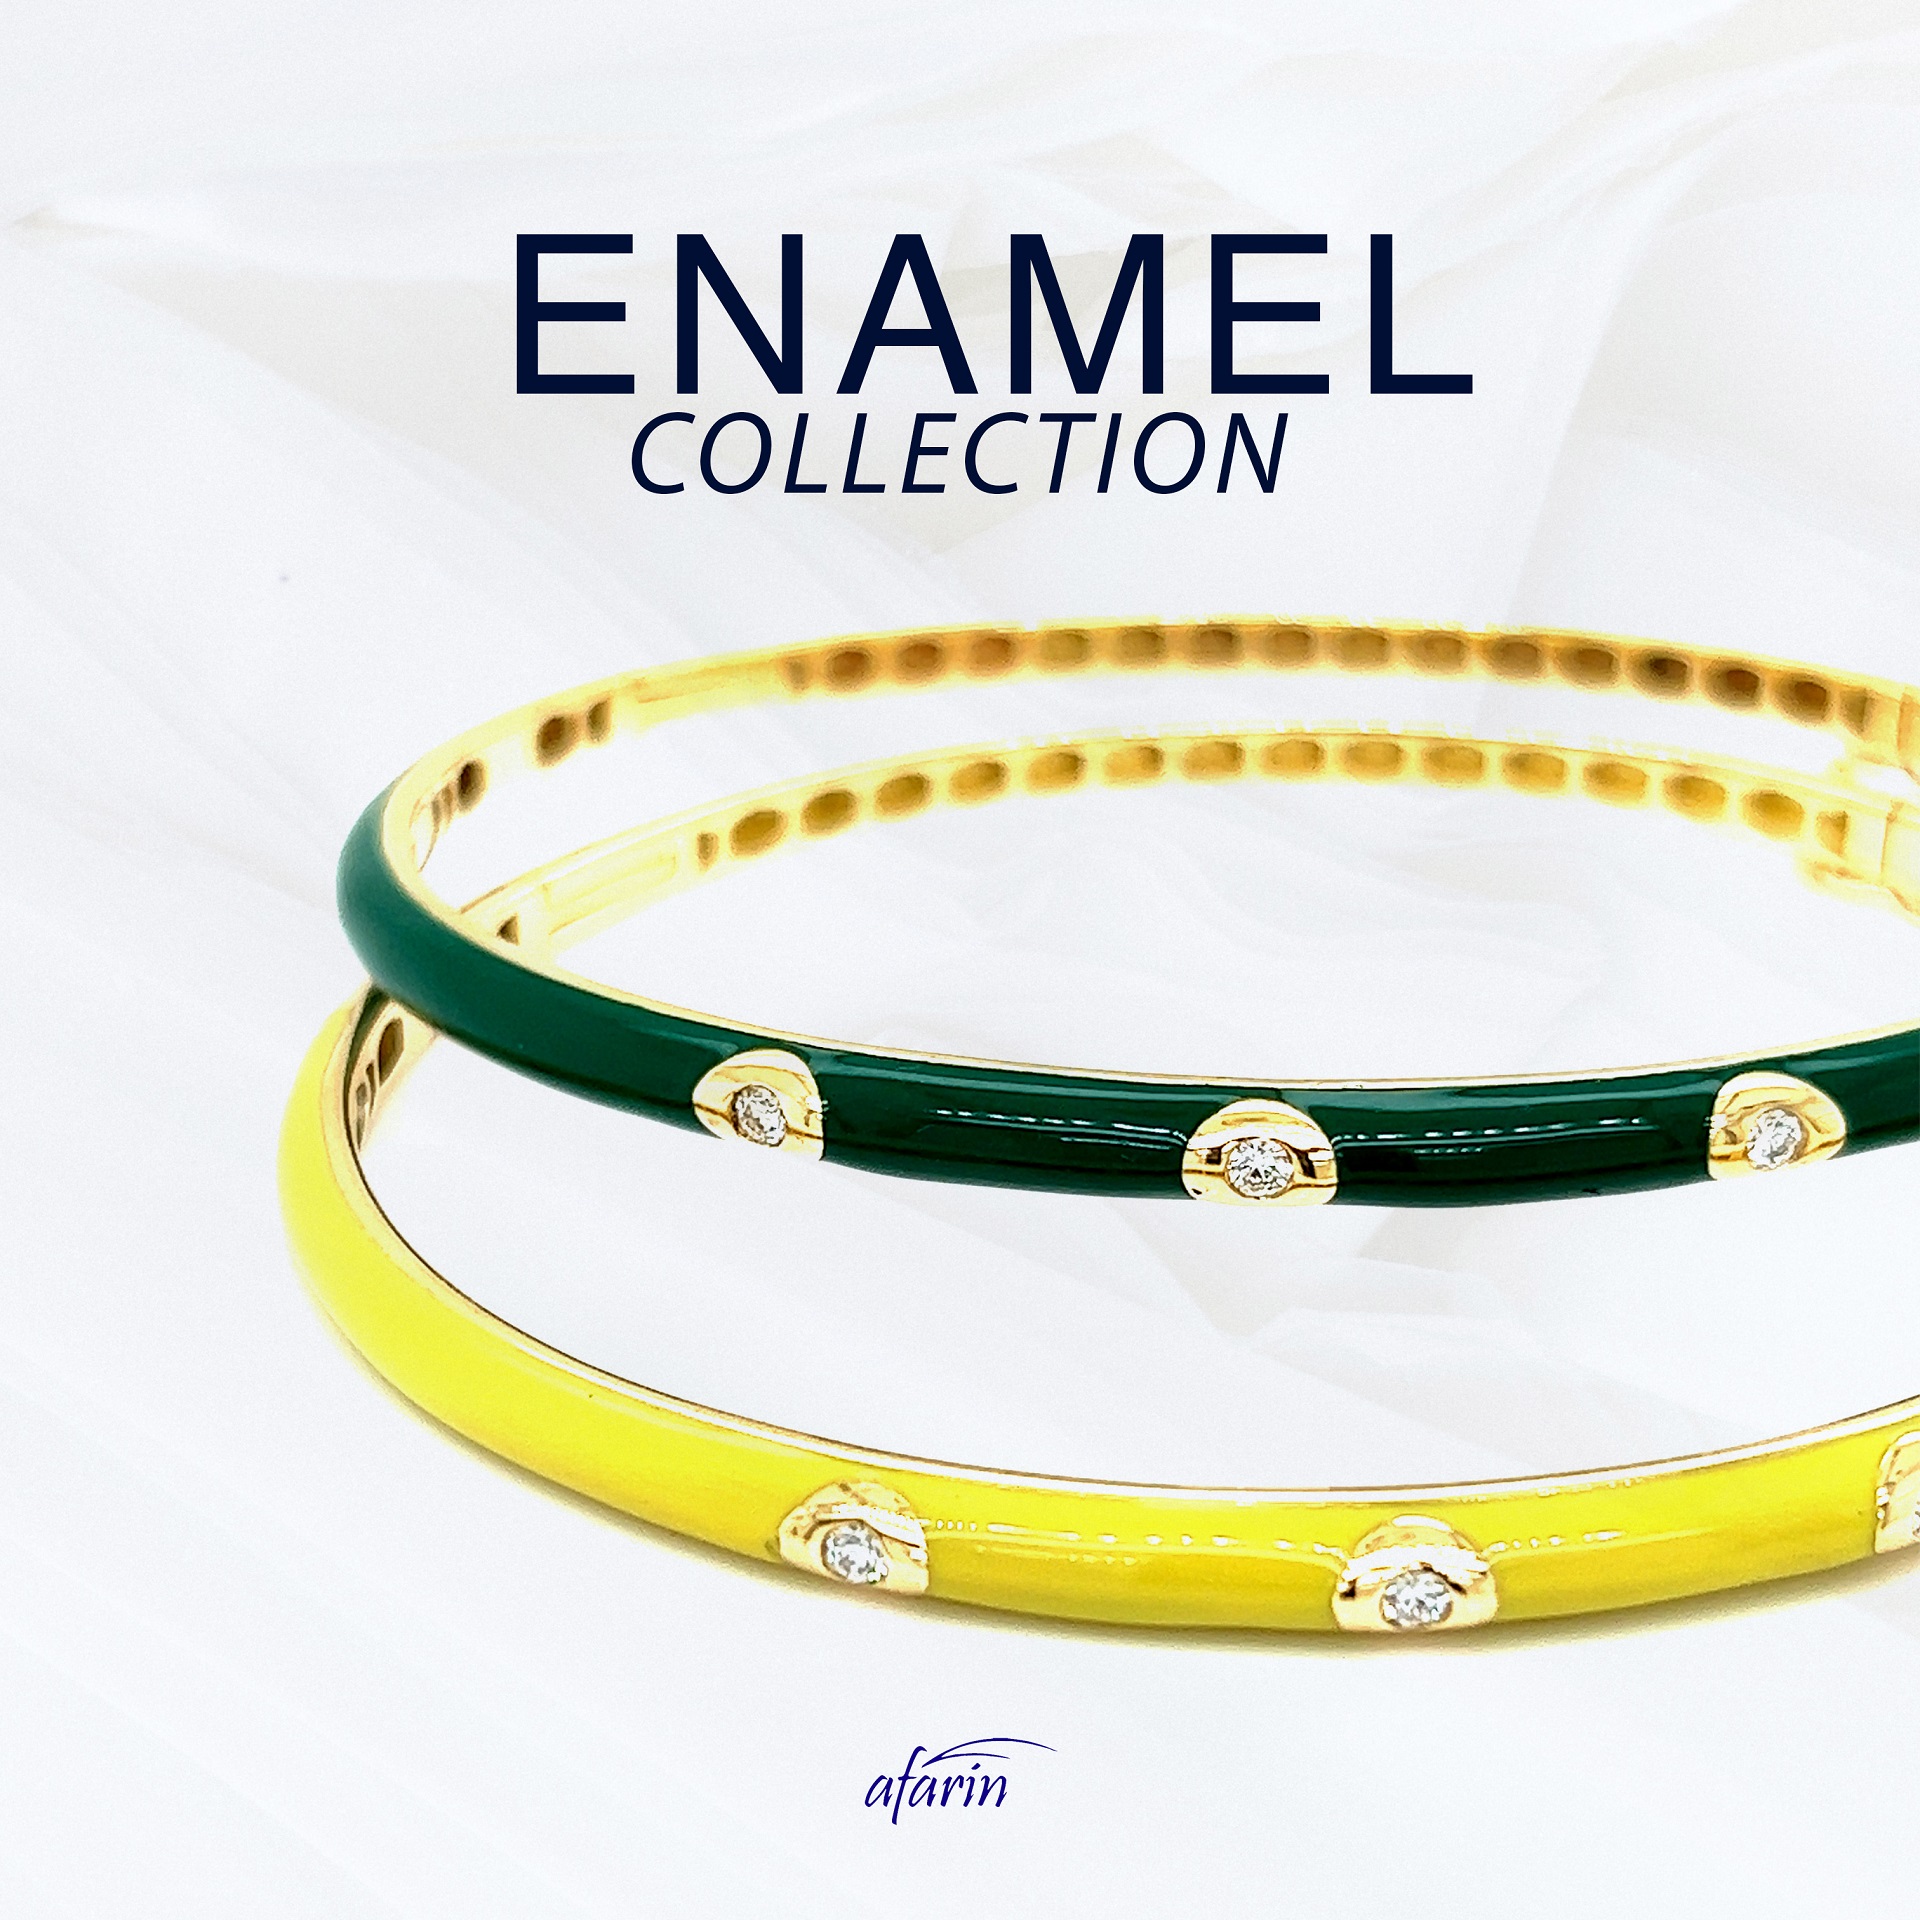 Enamel collection